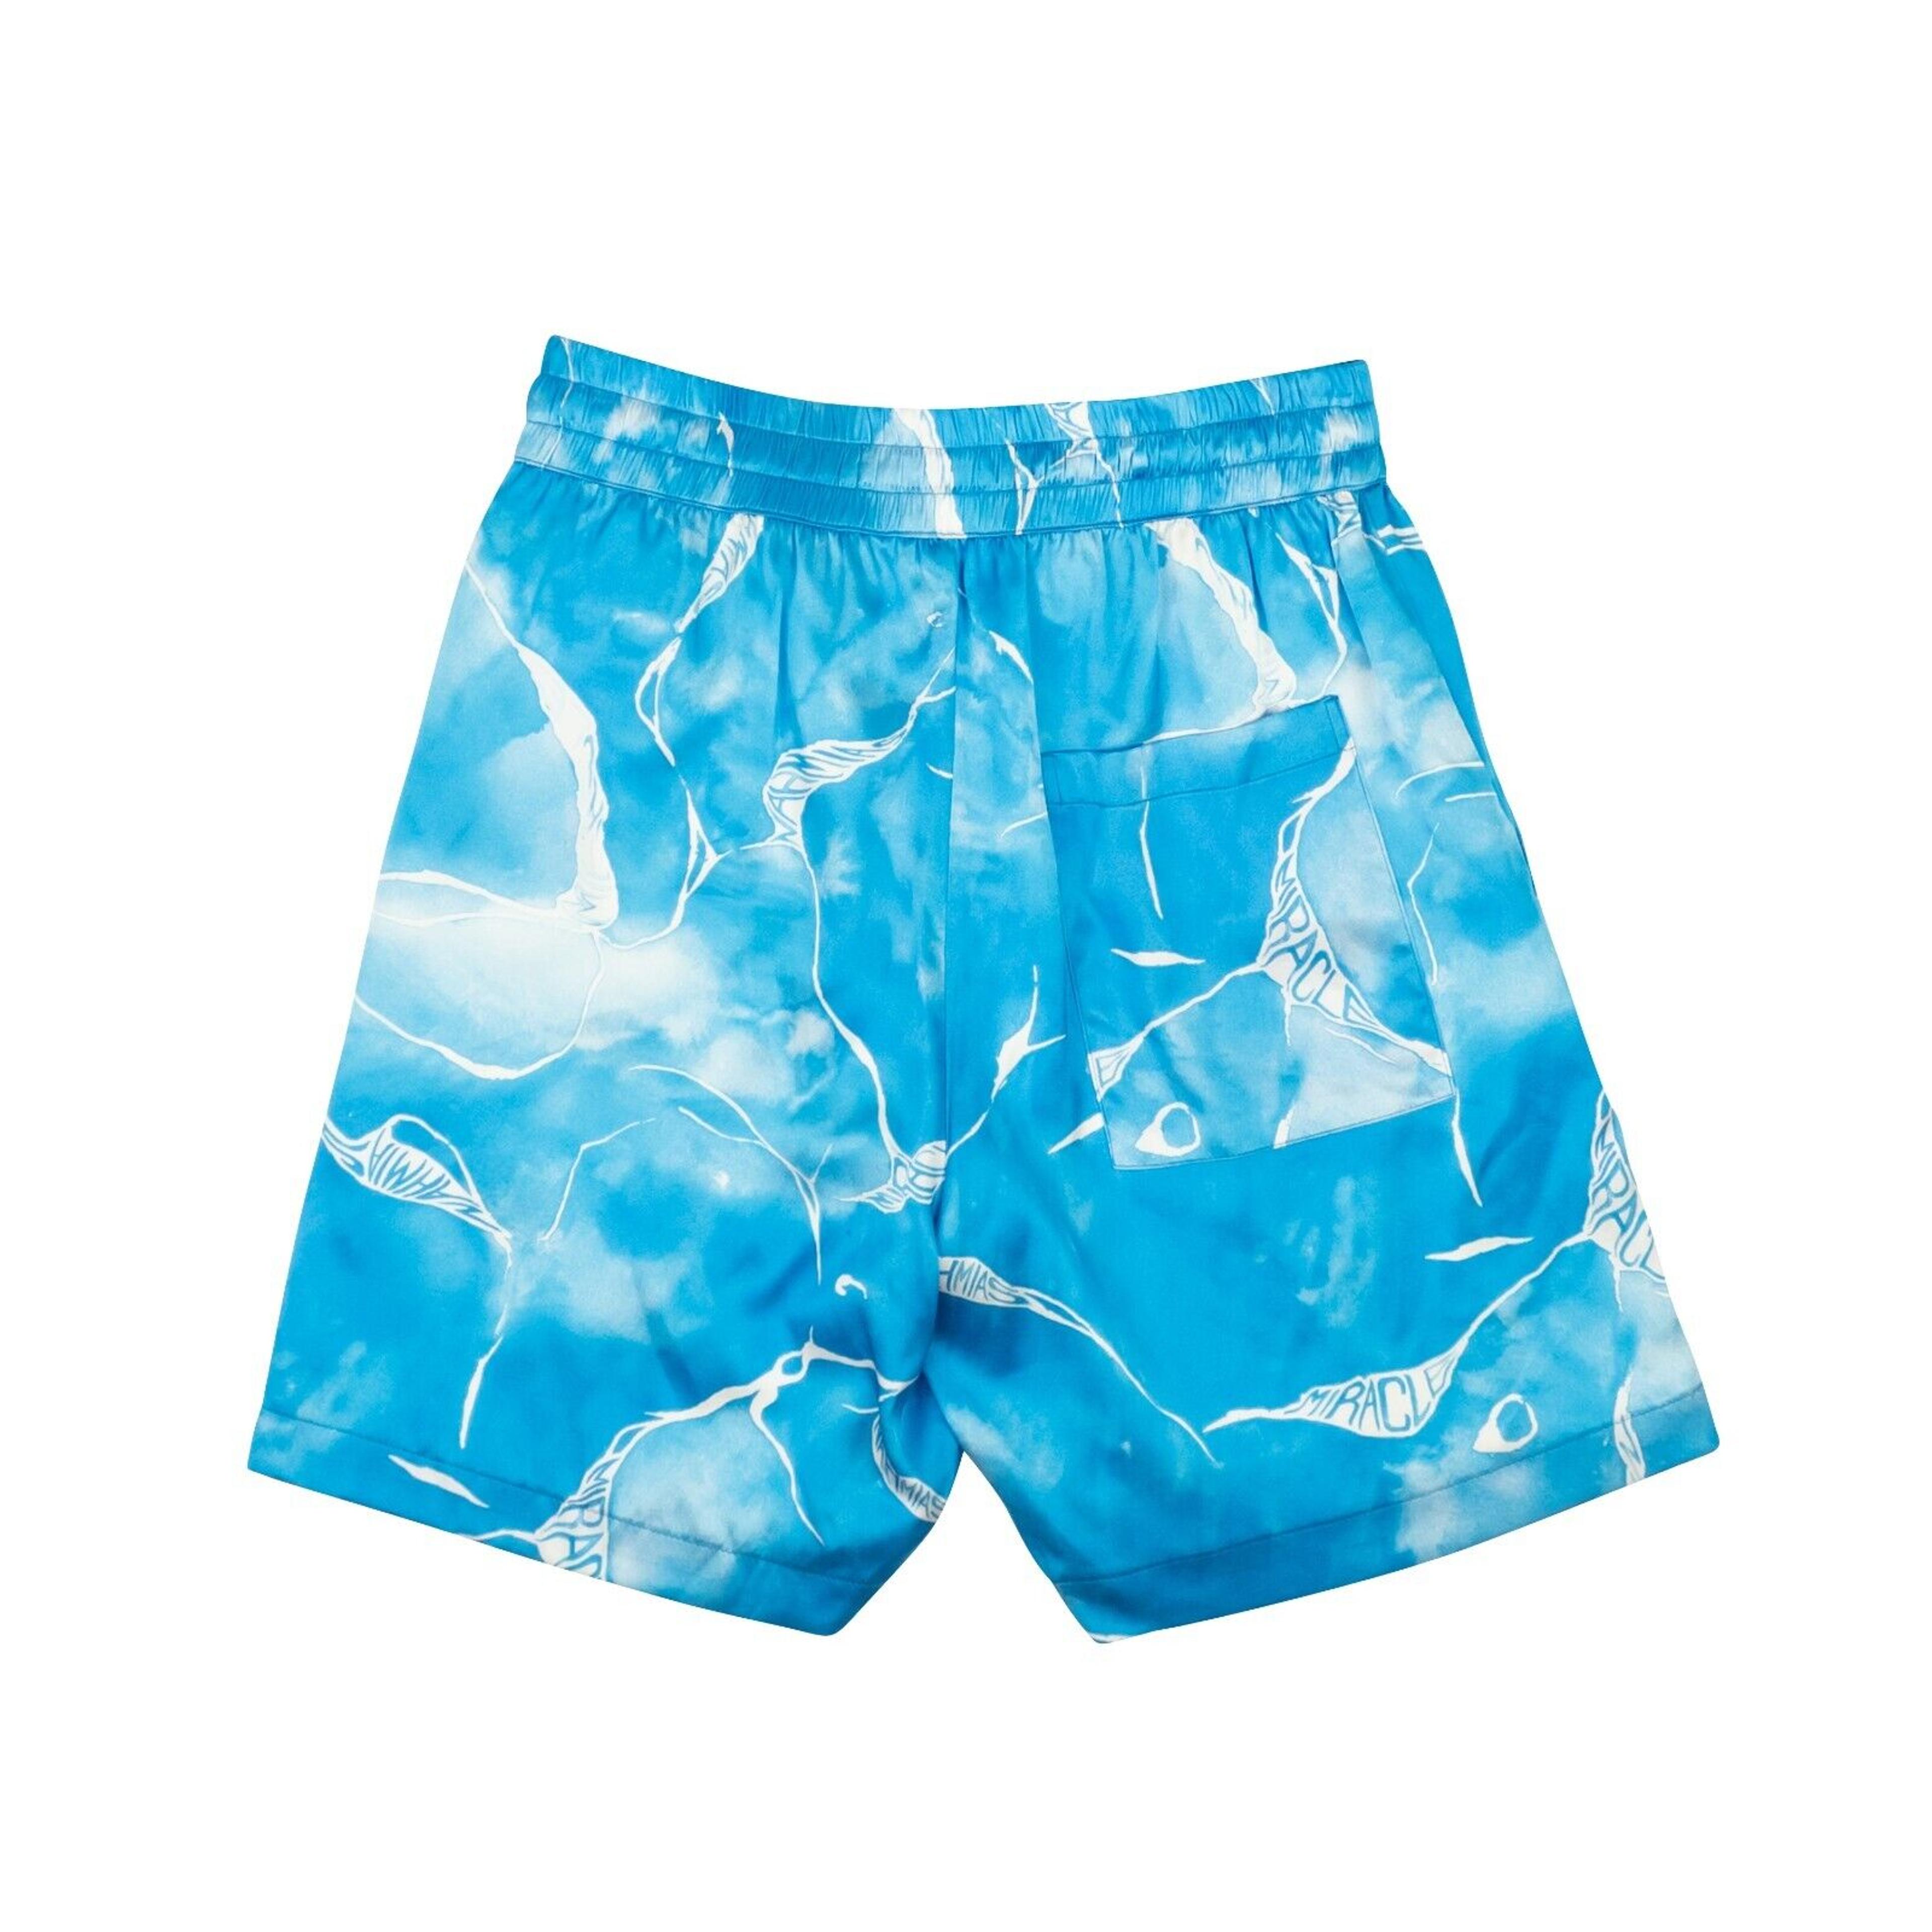 Alternate View 2 of Blue Silk Tie Dye Printed Shorts